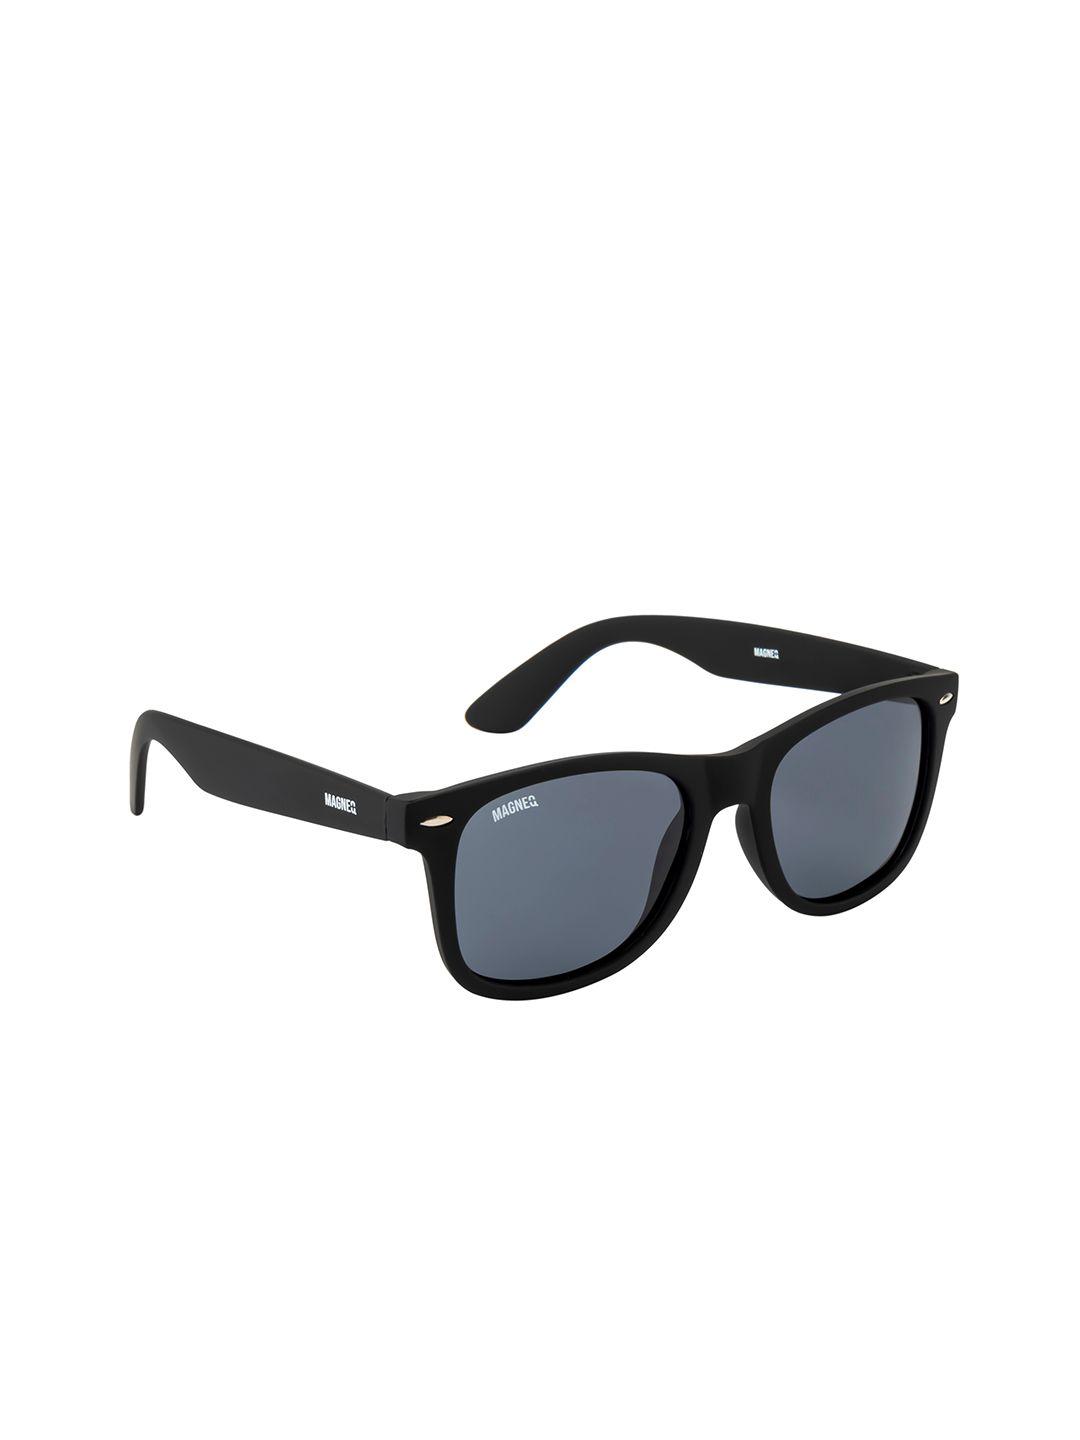 magneq unisex grey lens & black wayfarer sunglasses with polarised and uv protected lens